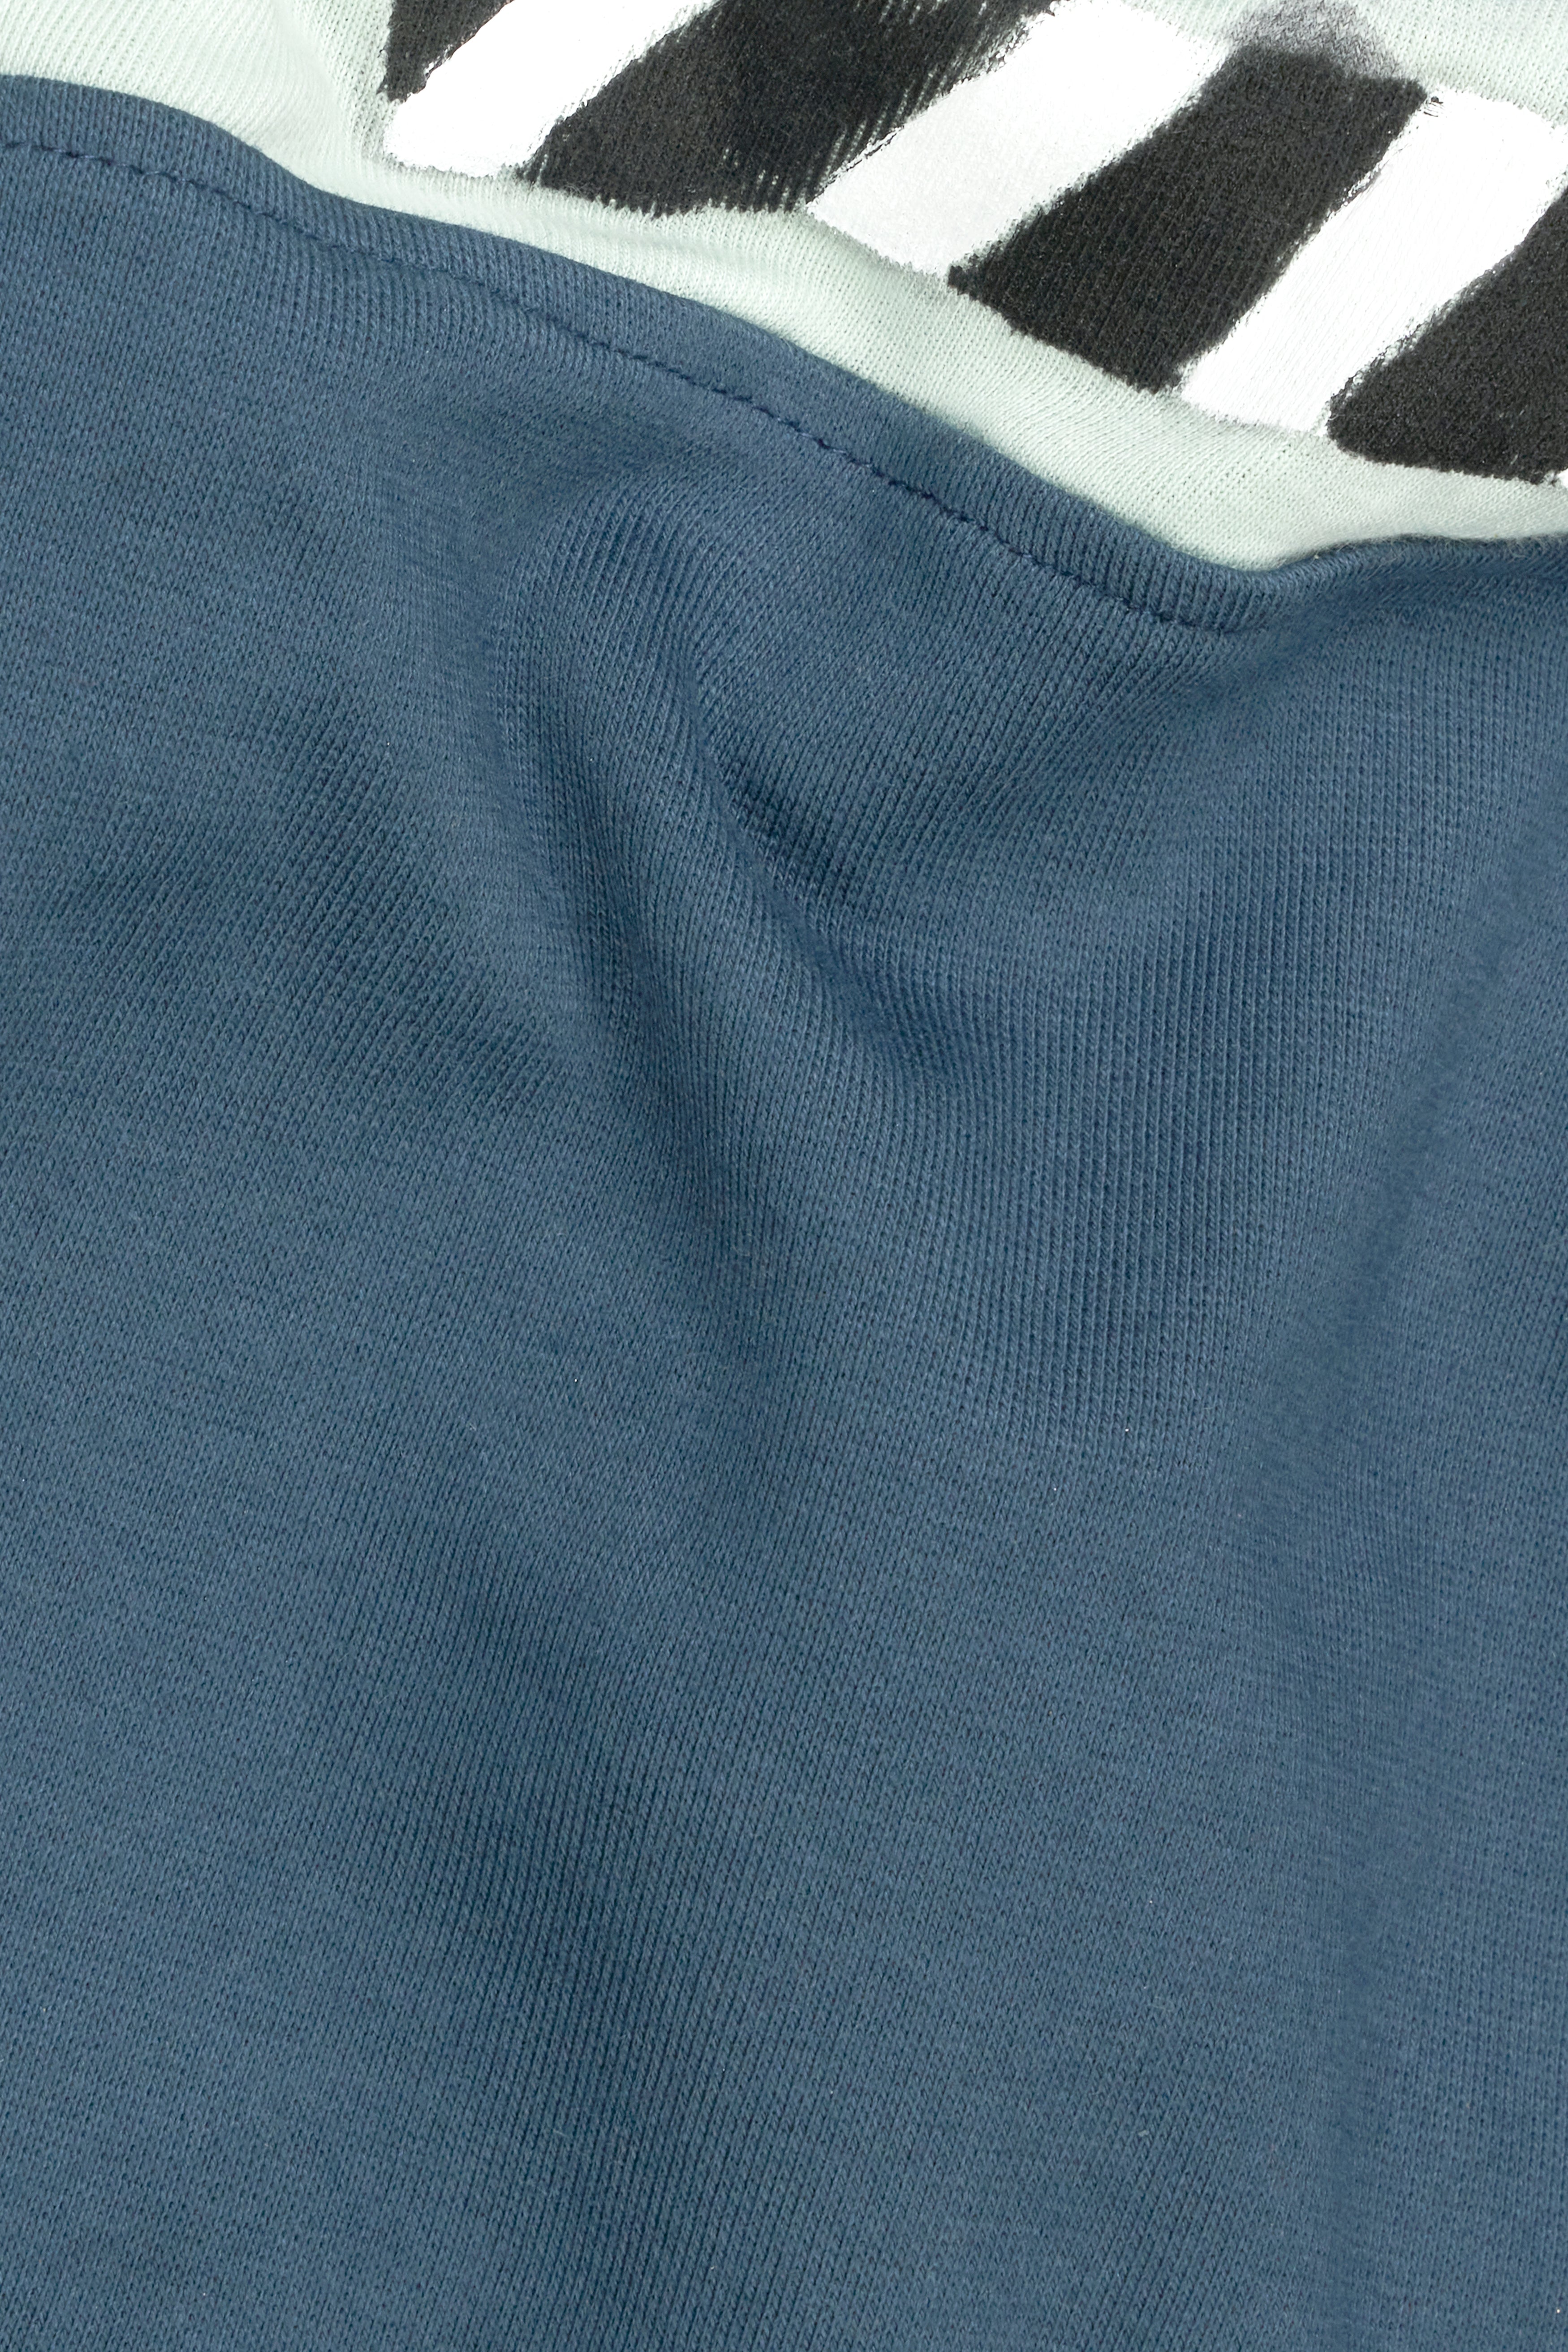 Marengo Blue and Sage Green Hand Painted Premium Cotton Jersey Sweatshirt,TS517-W01-ART-S, TS517-W01-ART-M, TS517-W01-ART-L, TS517-W01-ART-XL, TS517-W01-ART-XXL